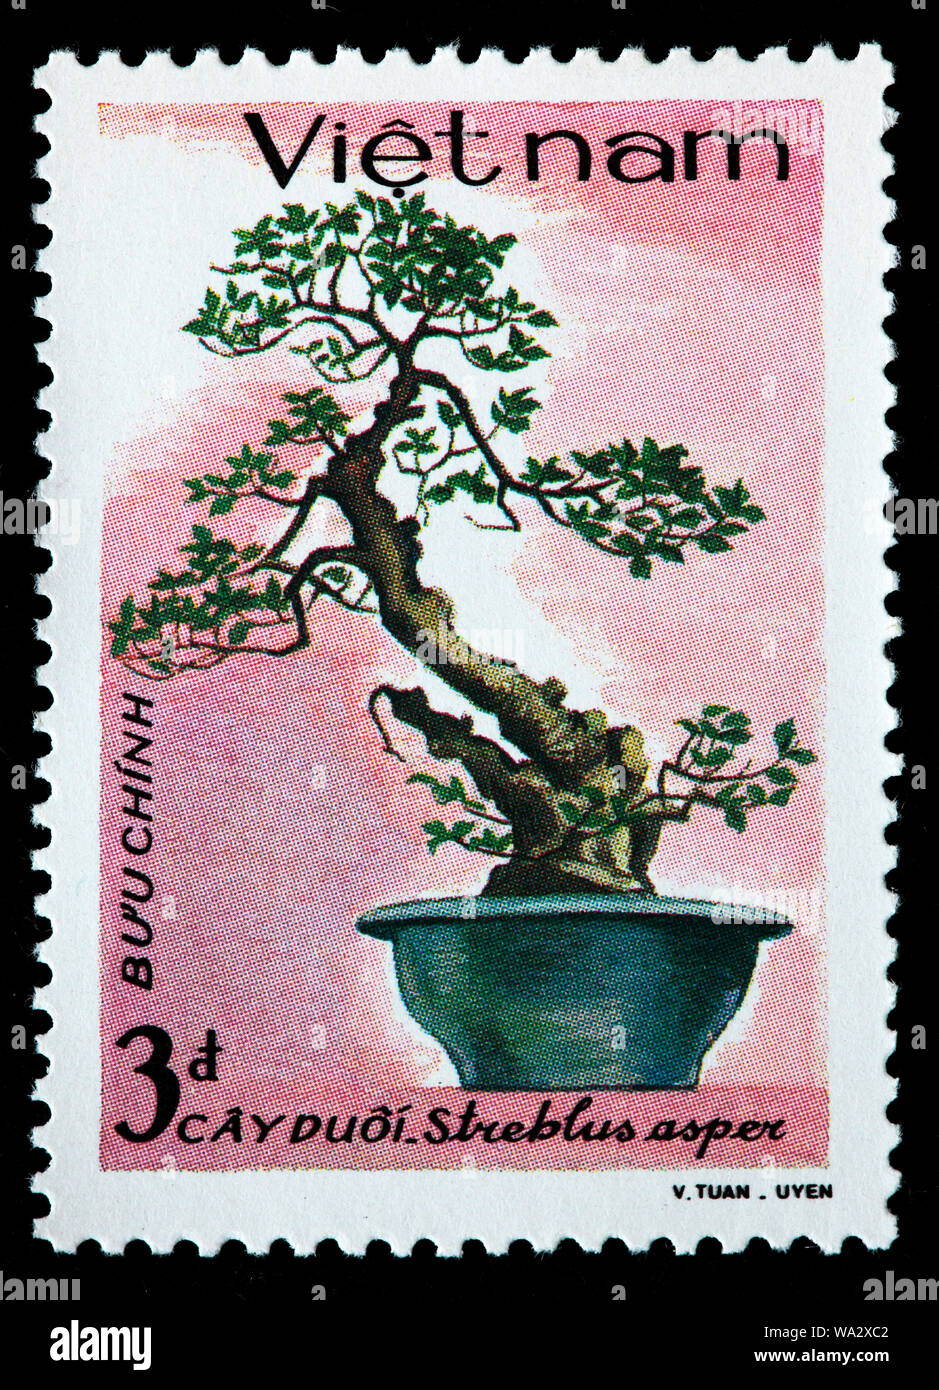 Streblus asper, Siamese rough bush, khoi, serut, toothbrush tree, bonsai tree, postage stamp, Vietnam, 1986 Stock Photo